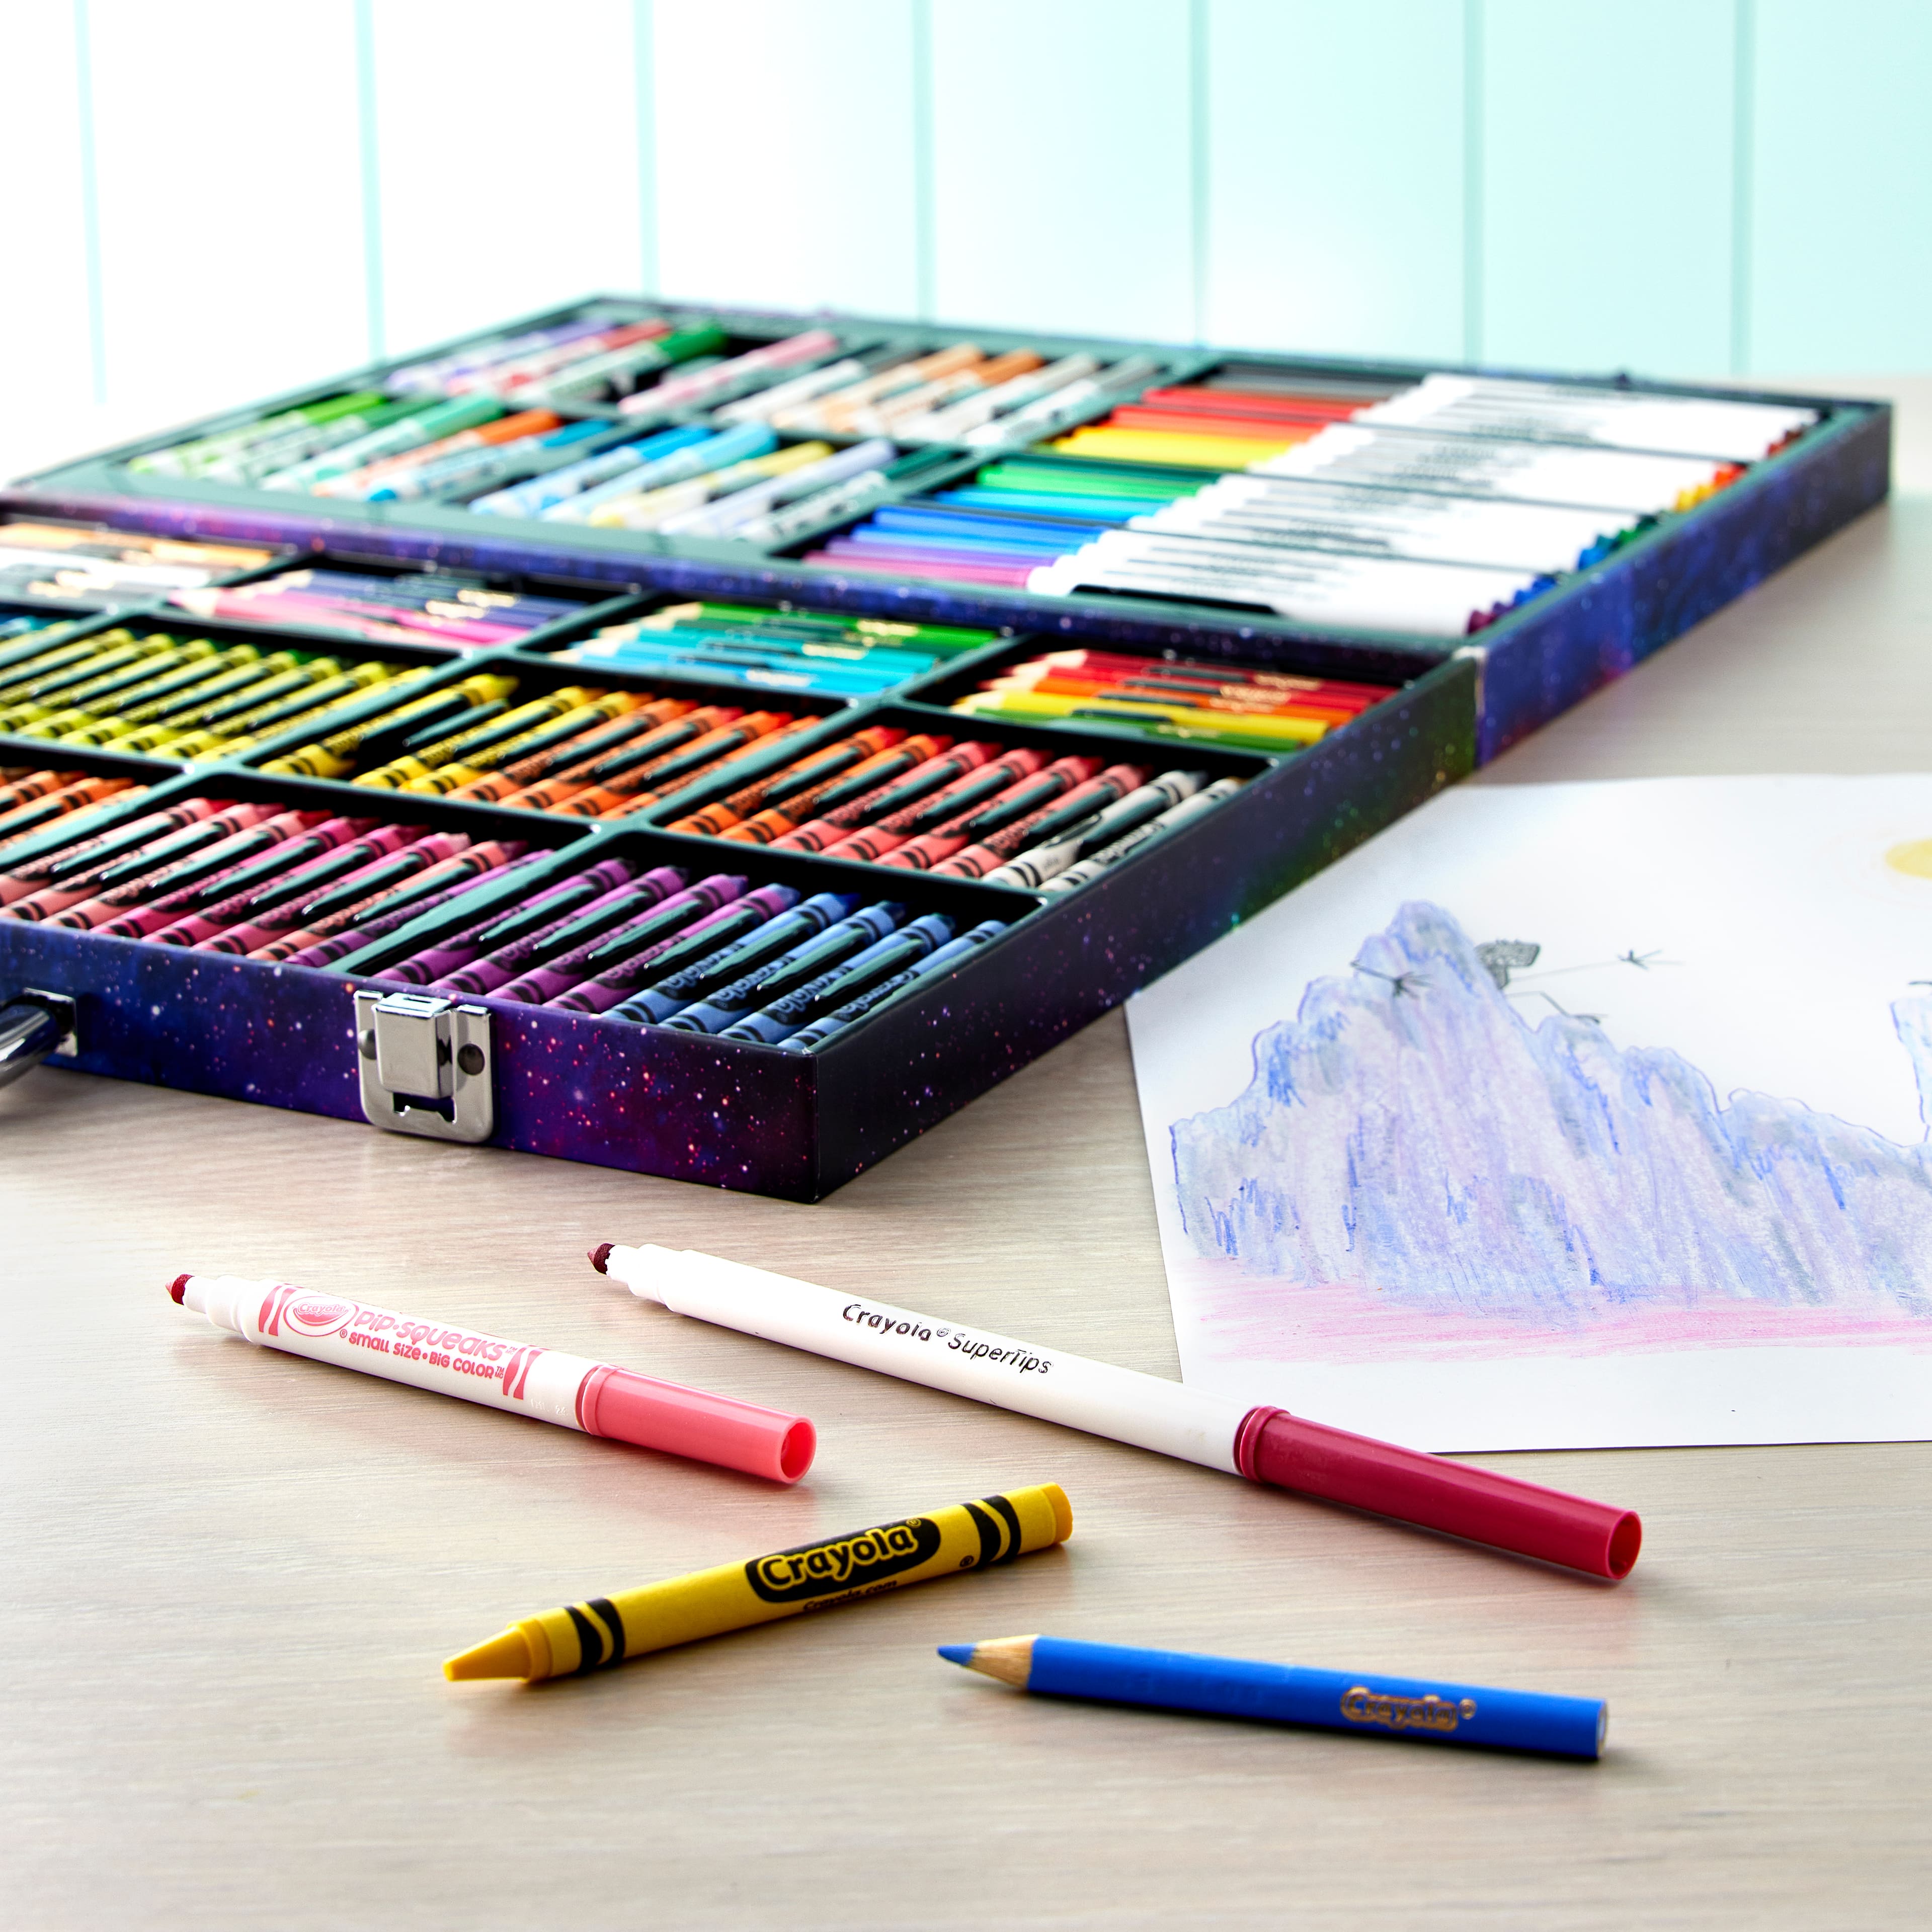 Crayola Inspiration Art Case, Writing Supplies, Household